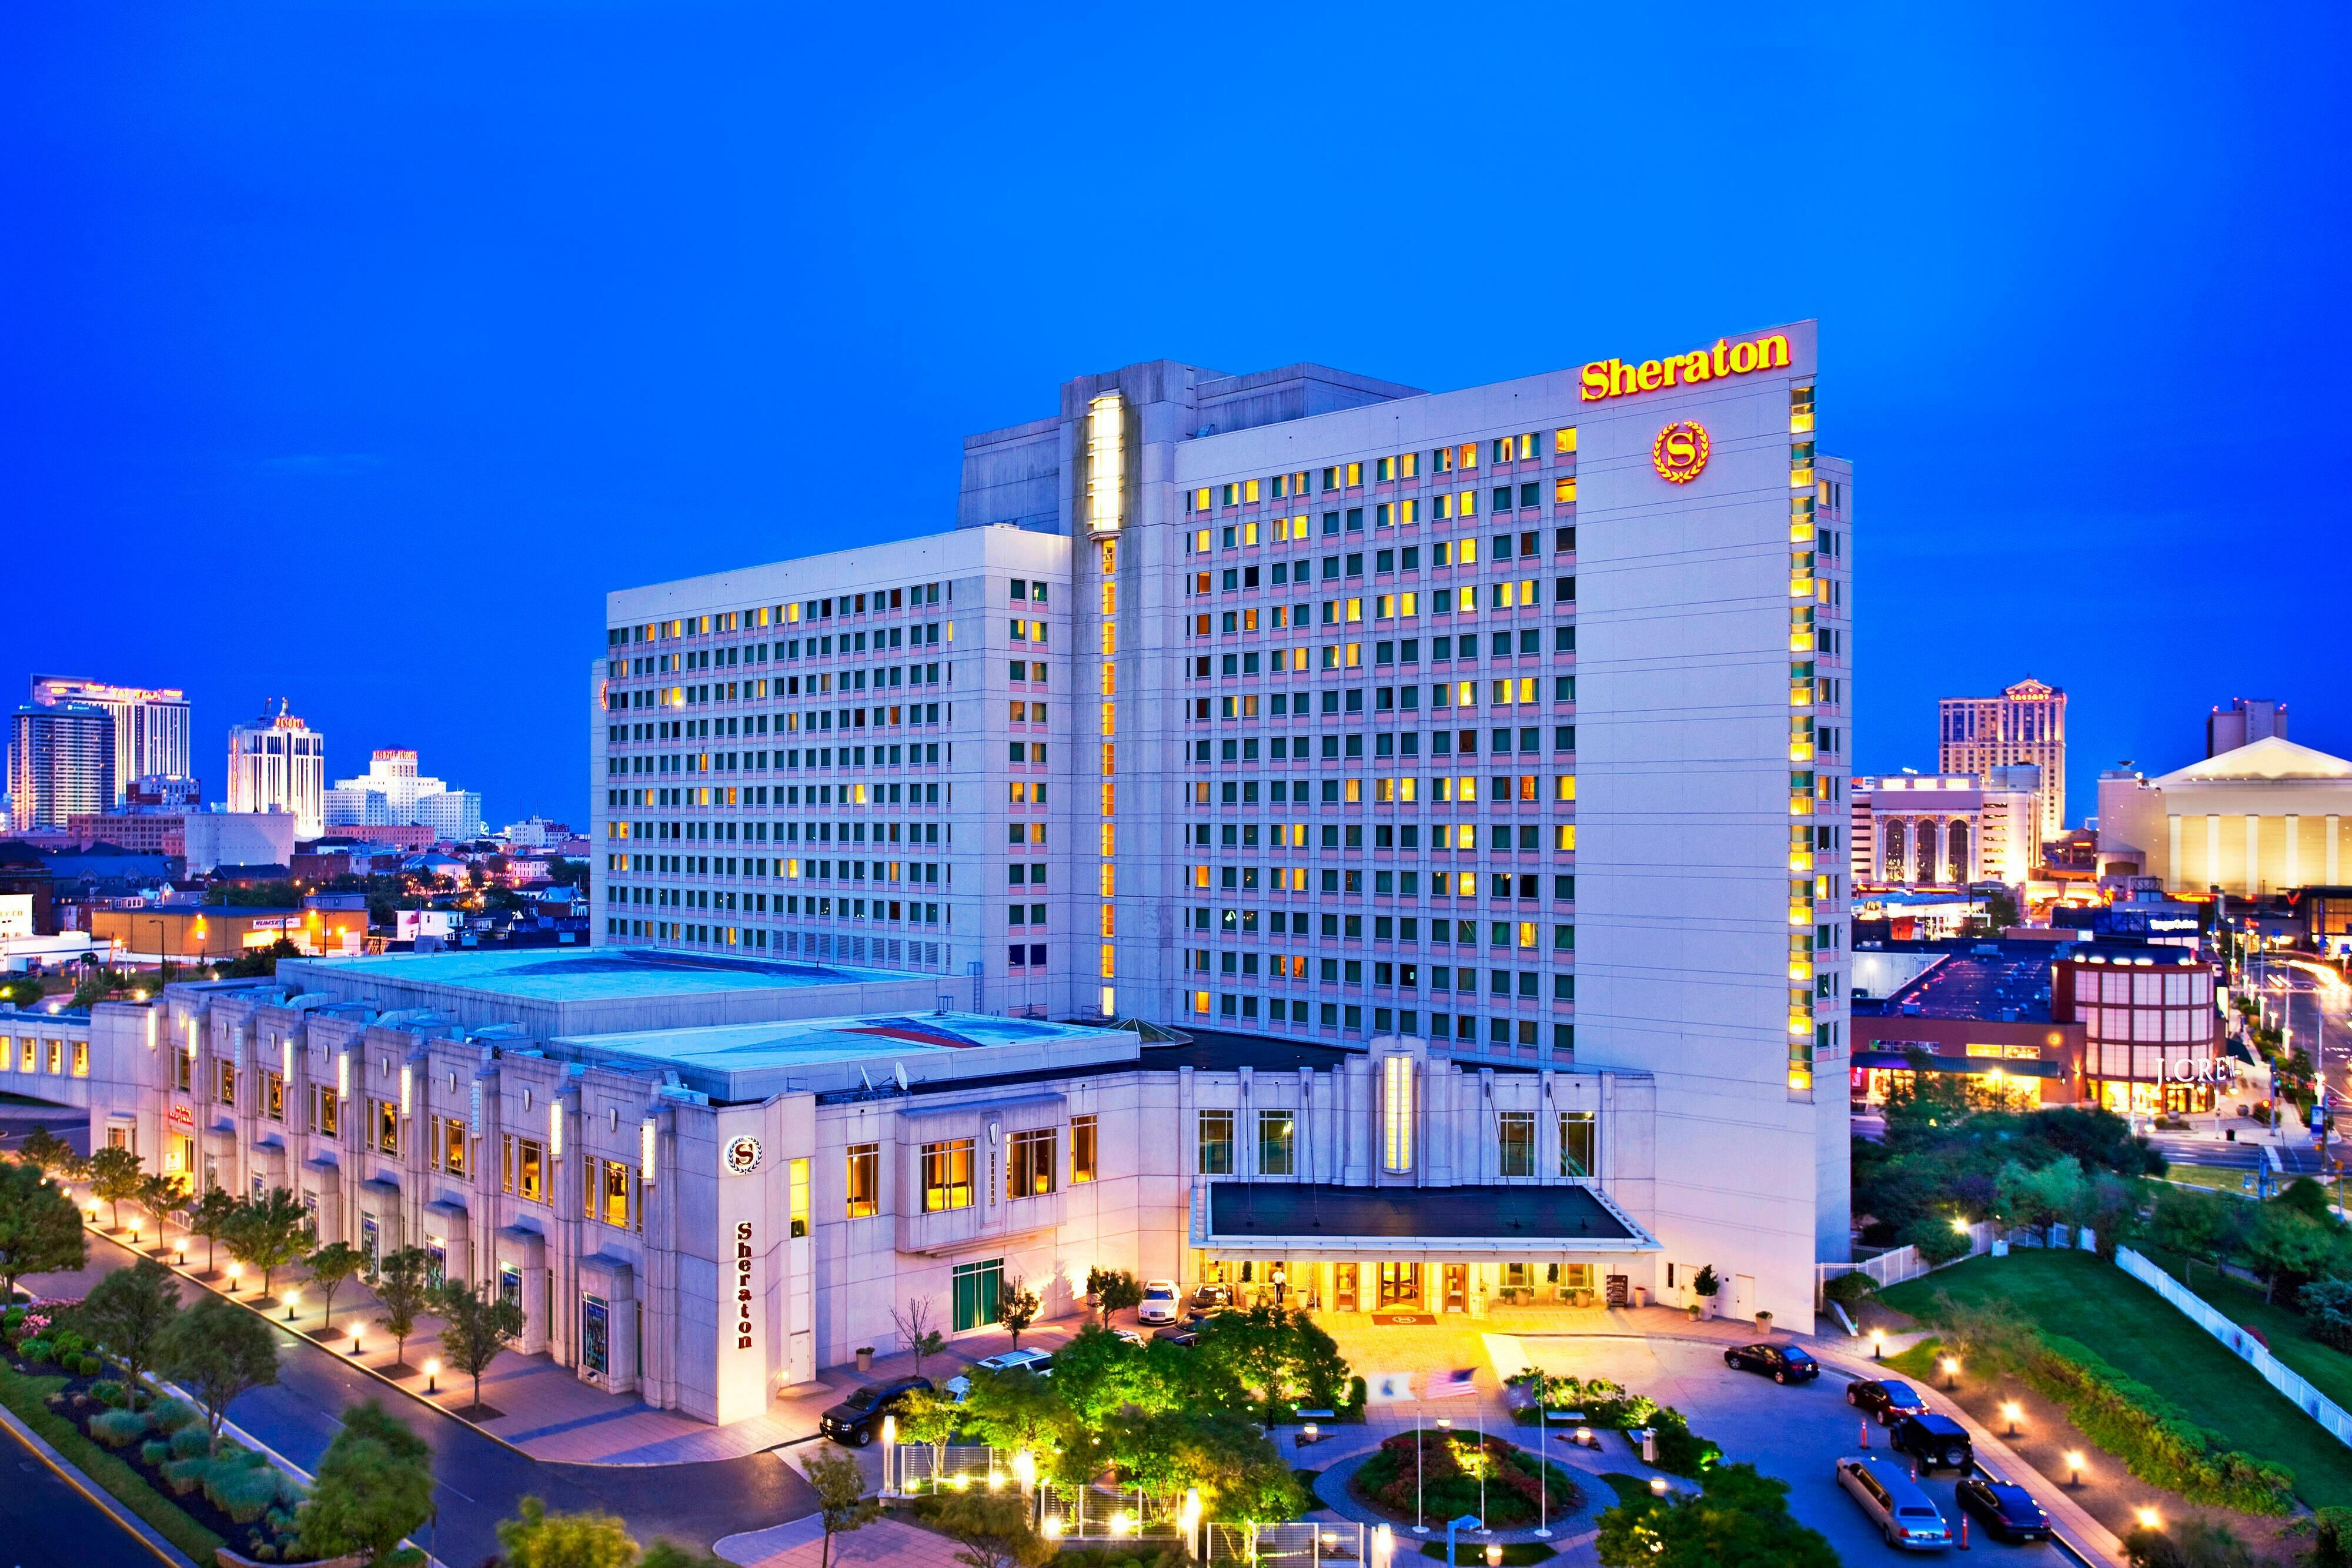 Photo of Sheraton Atlantic City Convention Center Hotel, Atlantic City, NJ